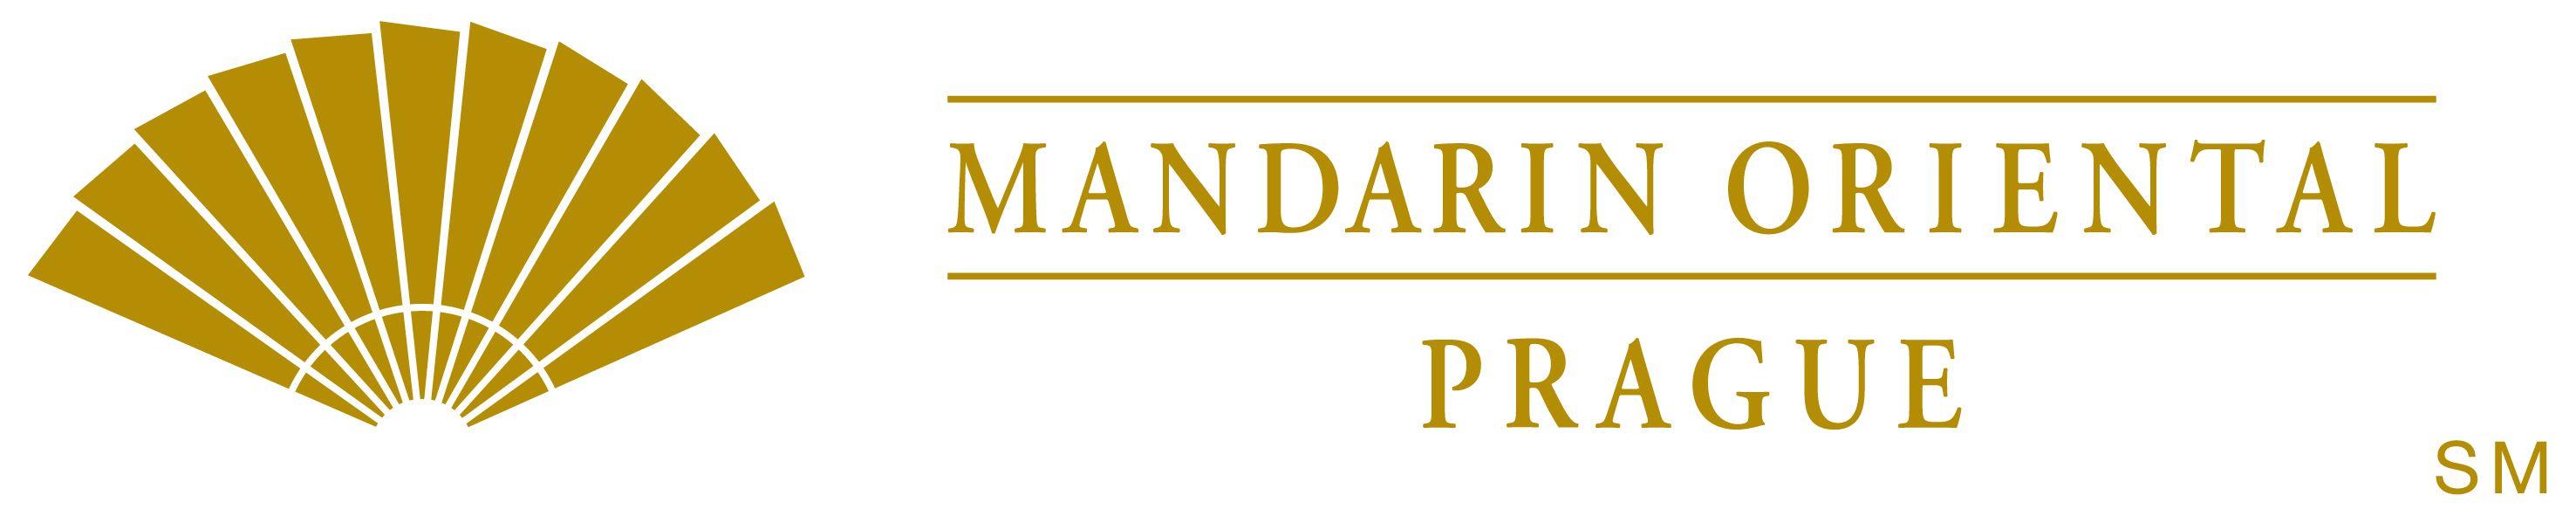 Mandarin Oriental Logo - Bookassist Digital Summit 2017 Prague